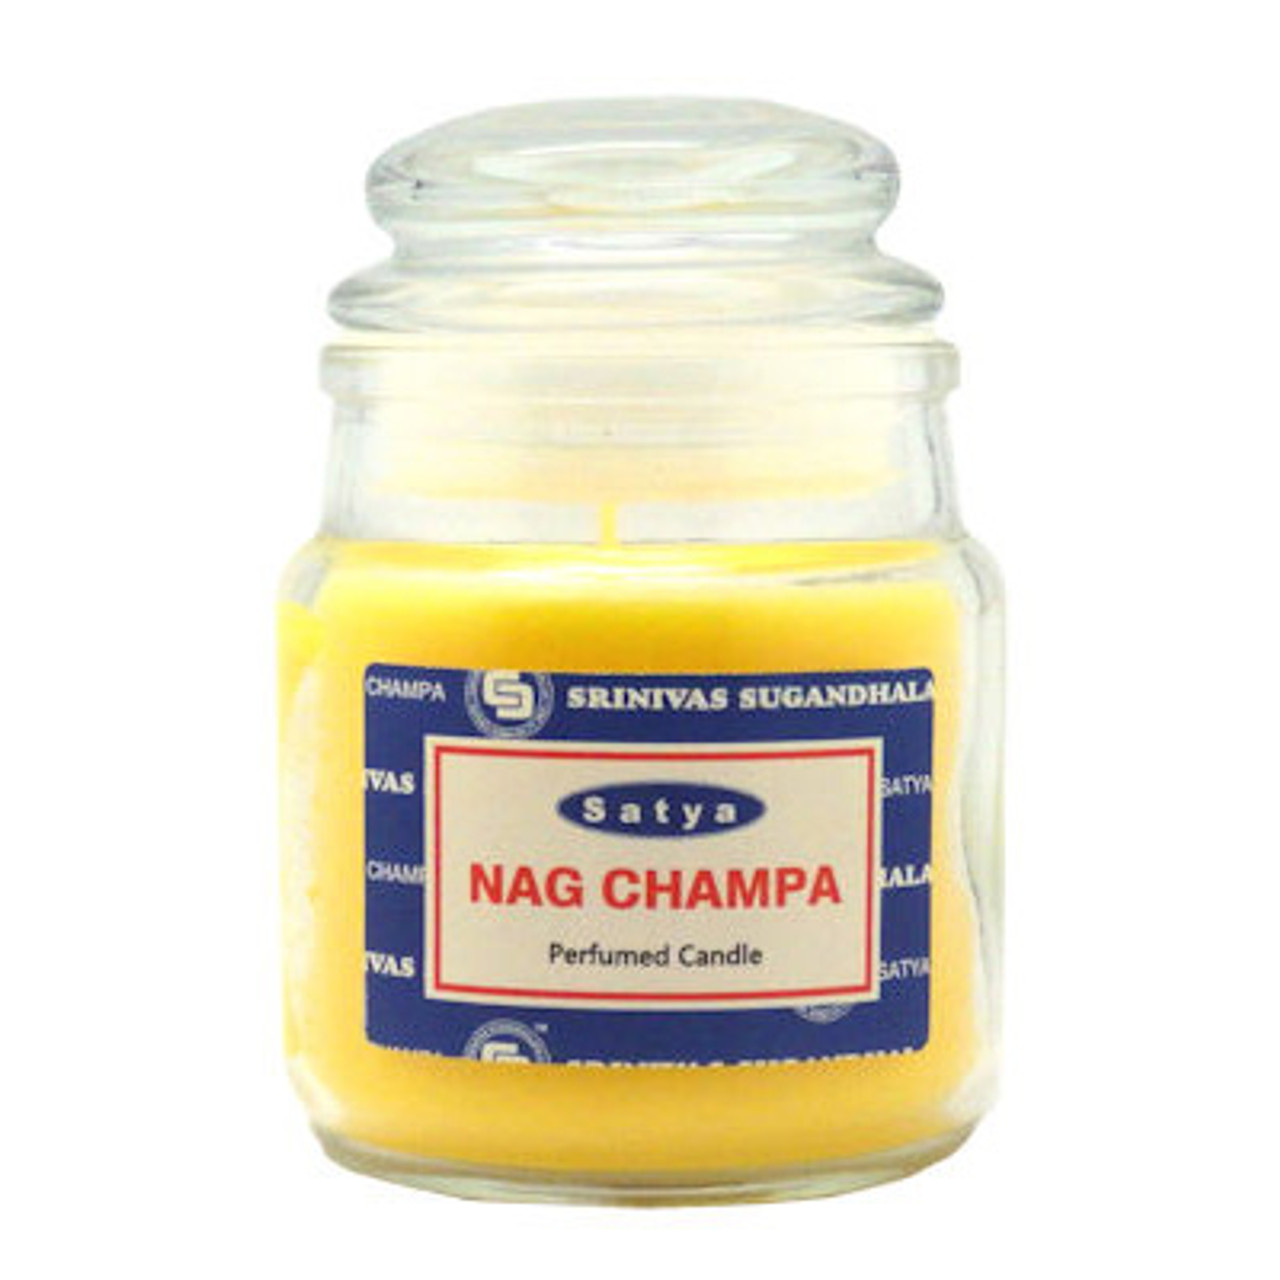 Nag Champa Jar Candle